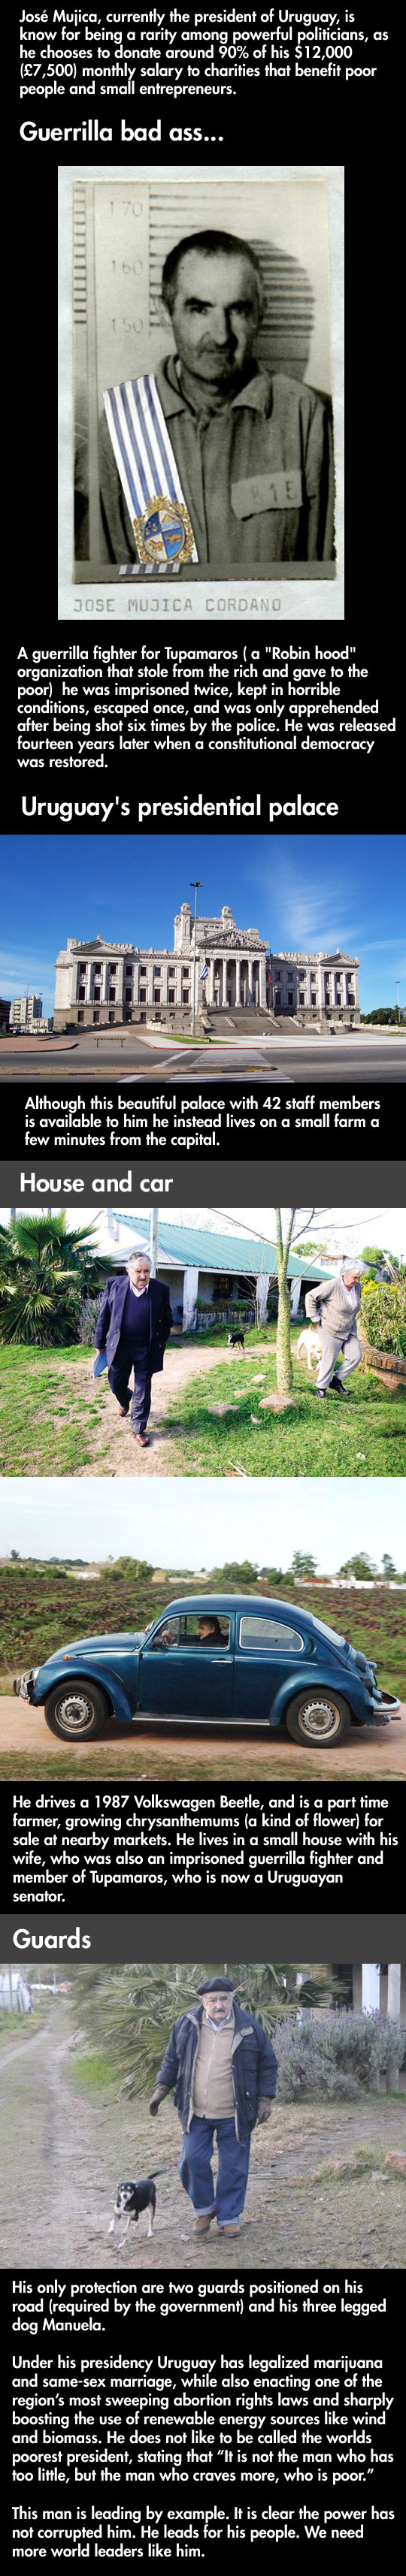 Jose Mujica - The President of Uruguay.